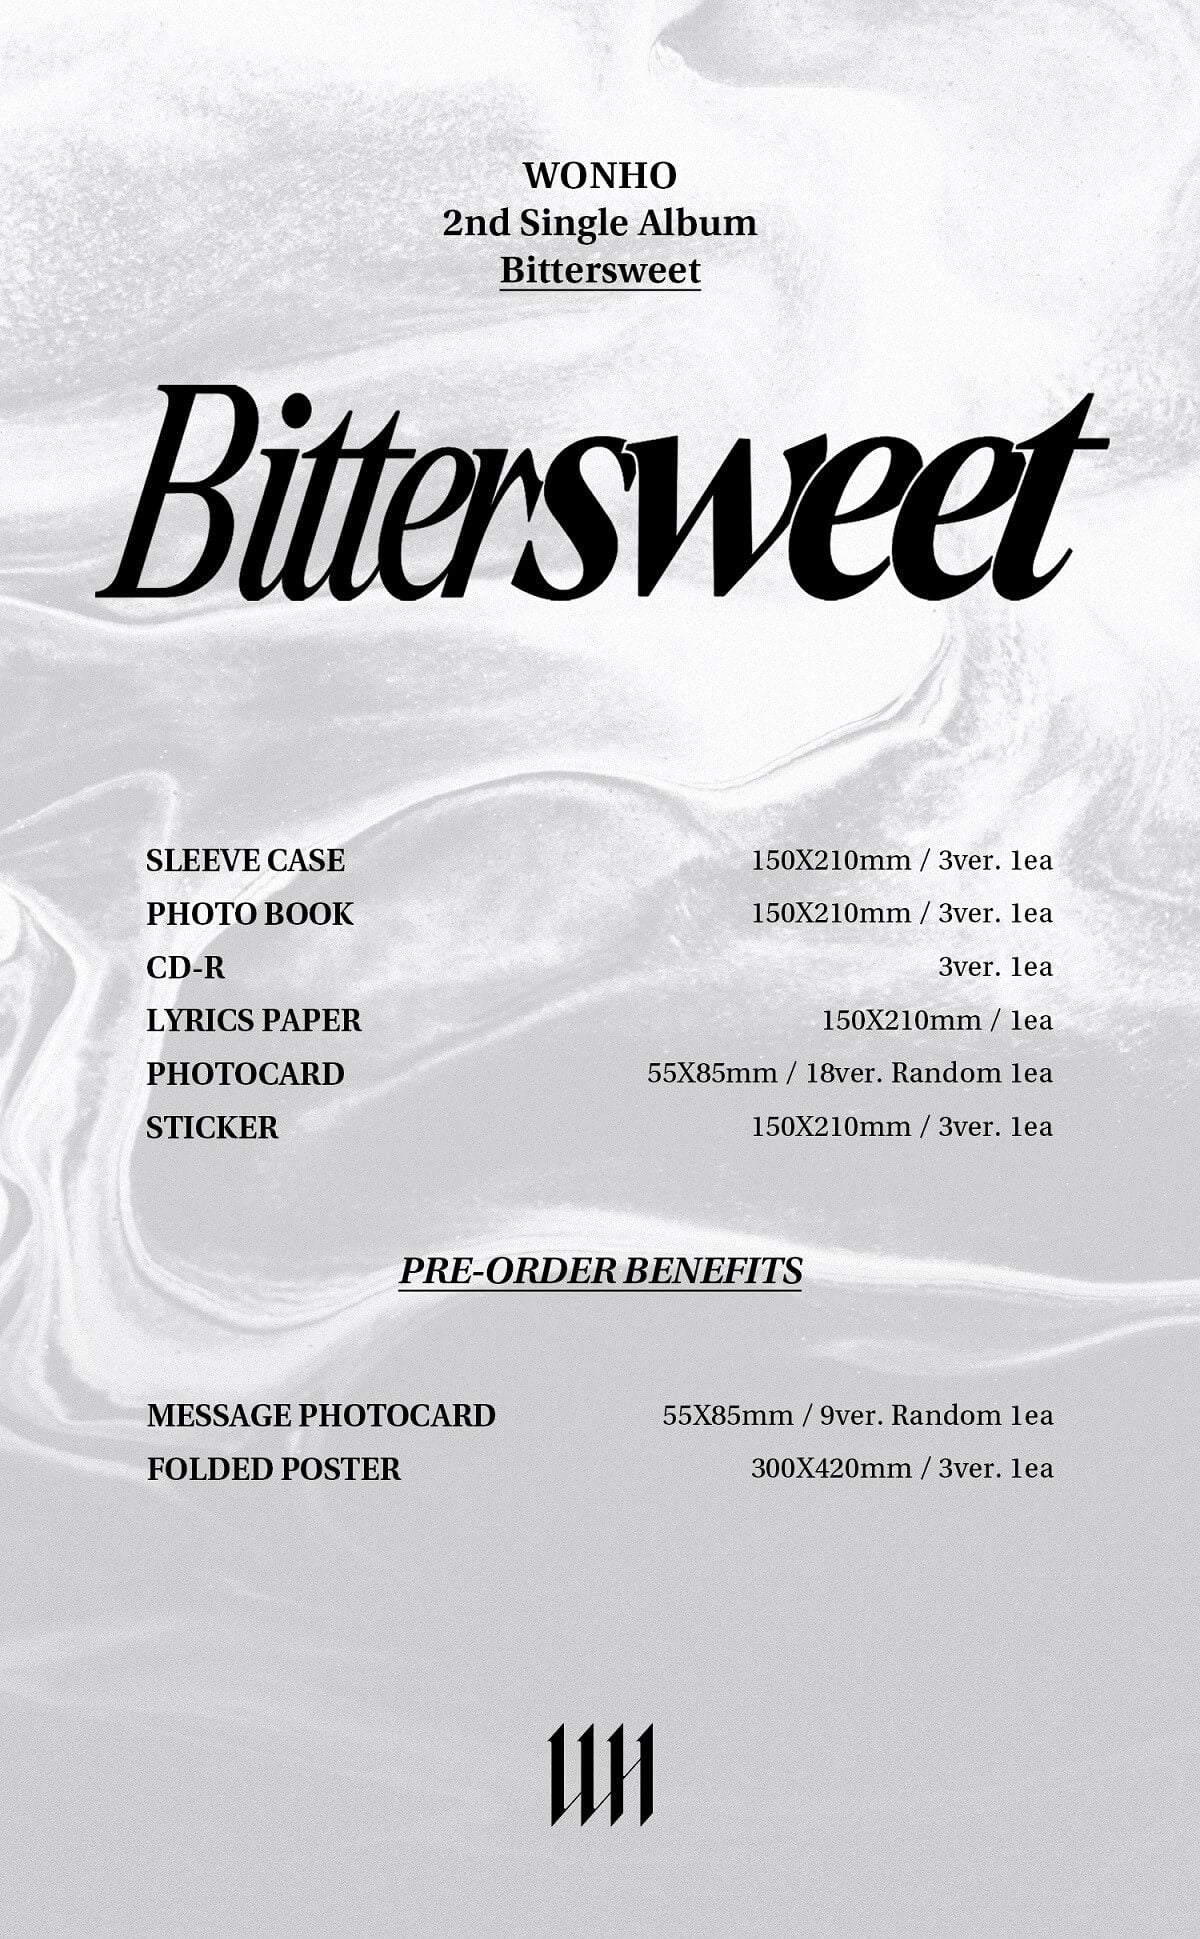 Wonho 2nd Single Album Bittersweet Ver. 1 + Ver. 2 + Ver. 3 Album Info